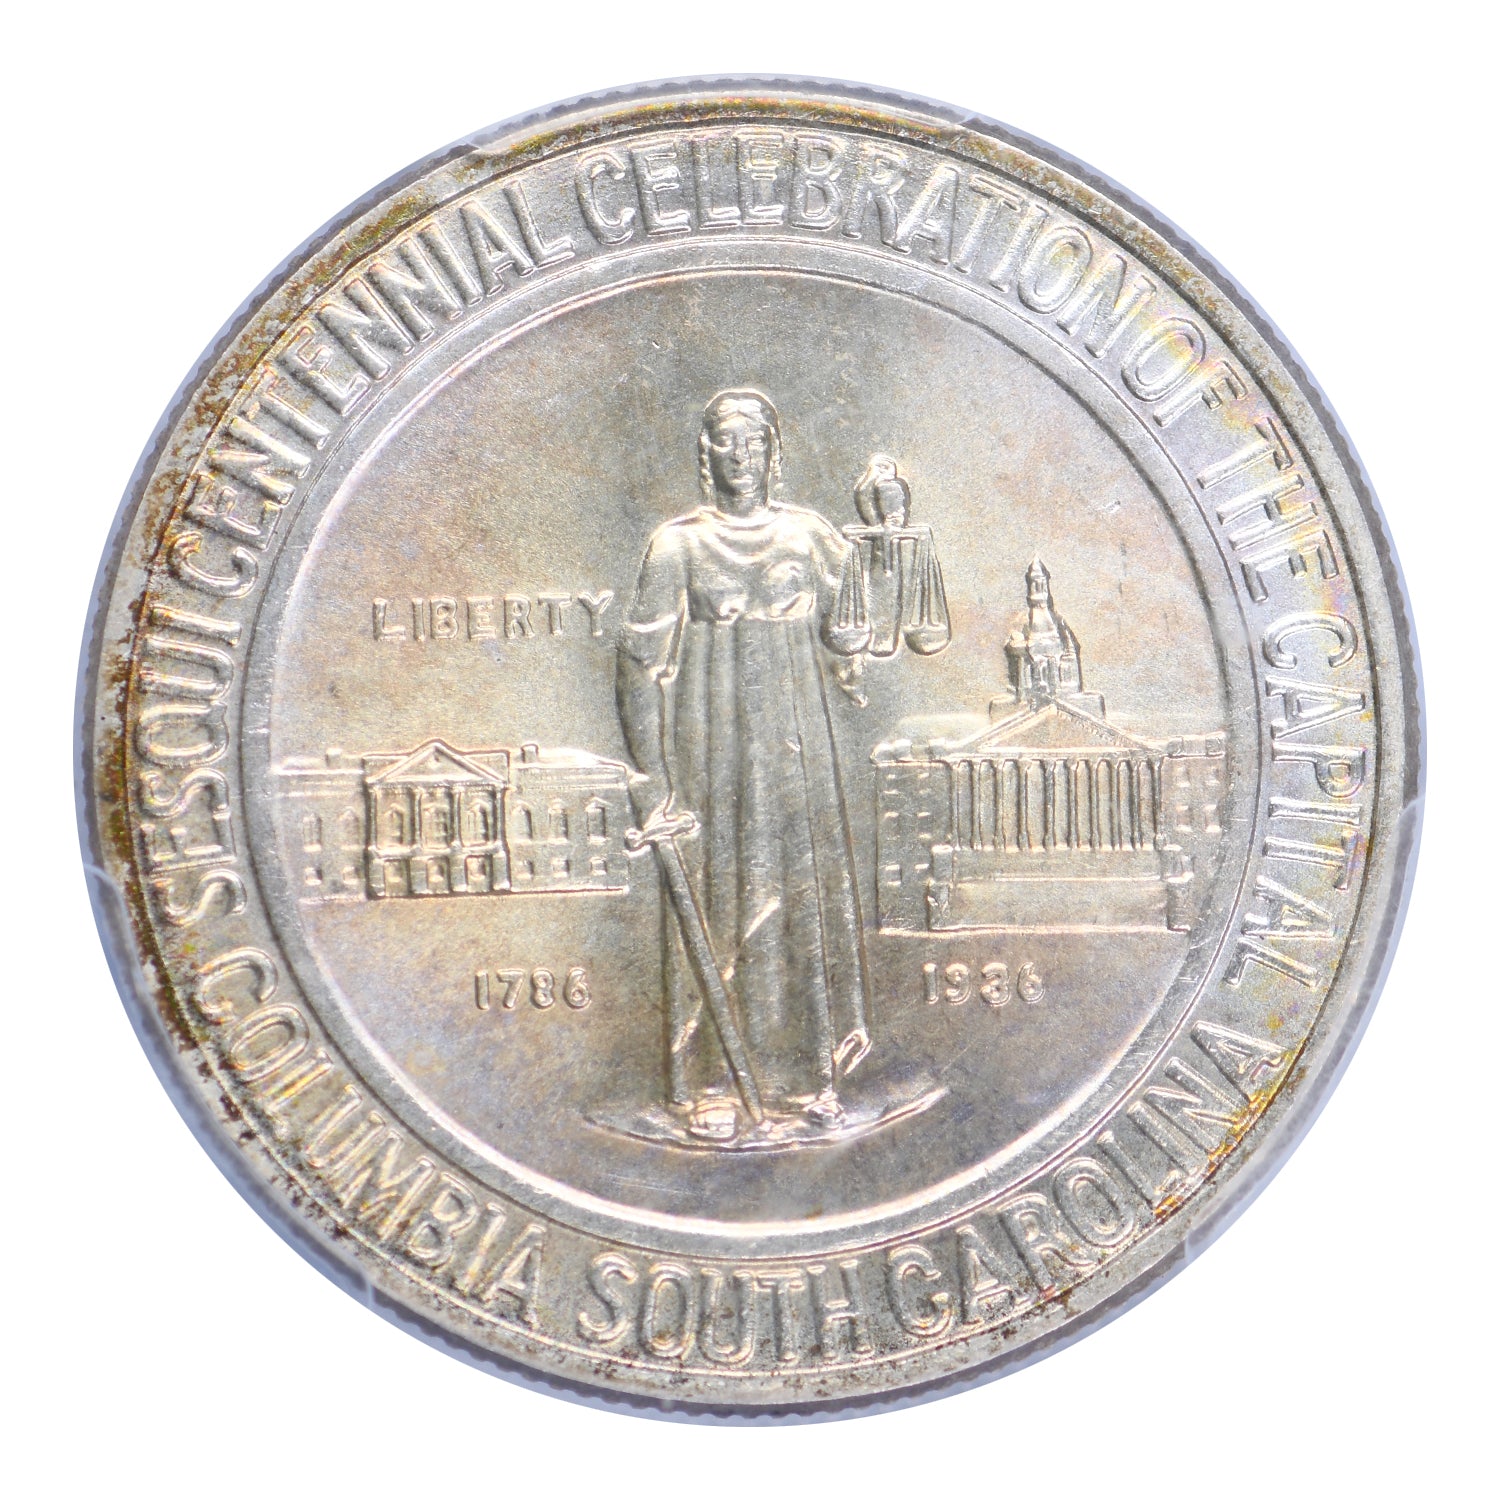 1936 Columbia Commemorative Silver Half Dollar PCGS MS65